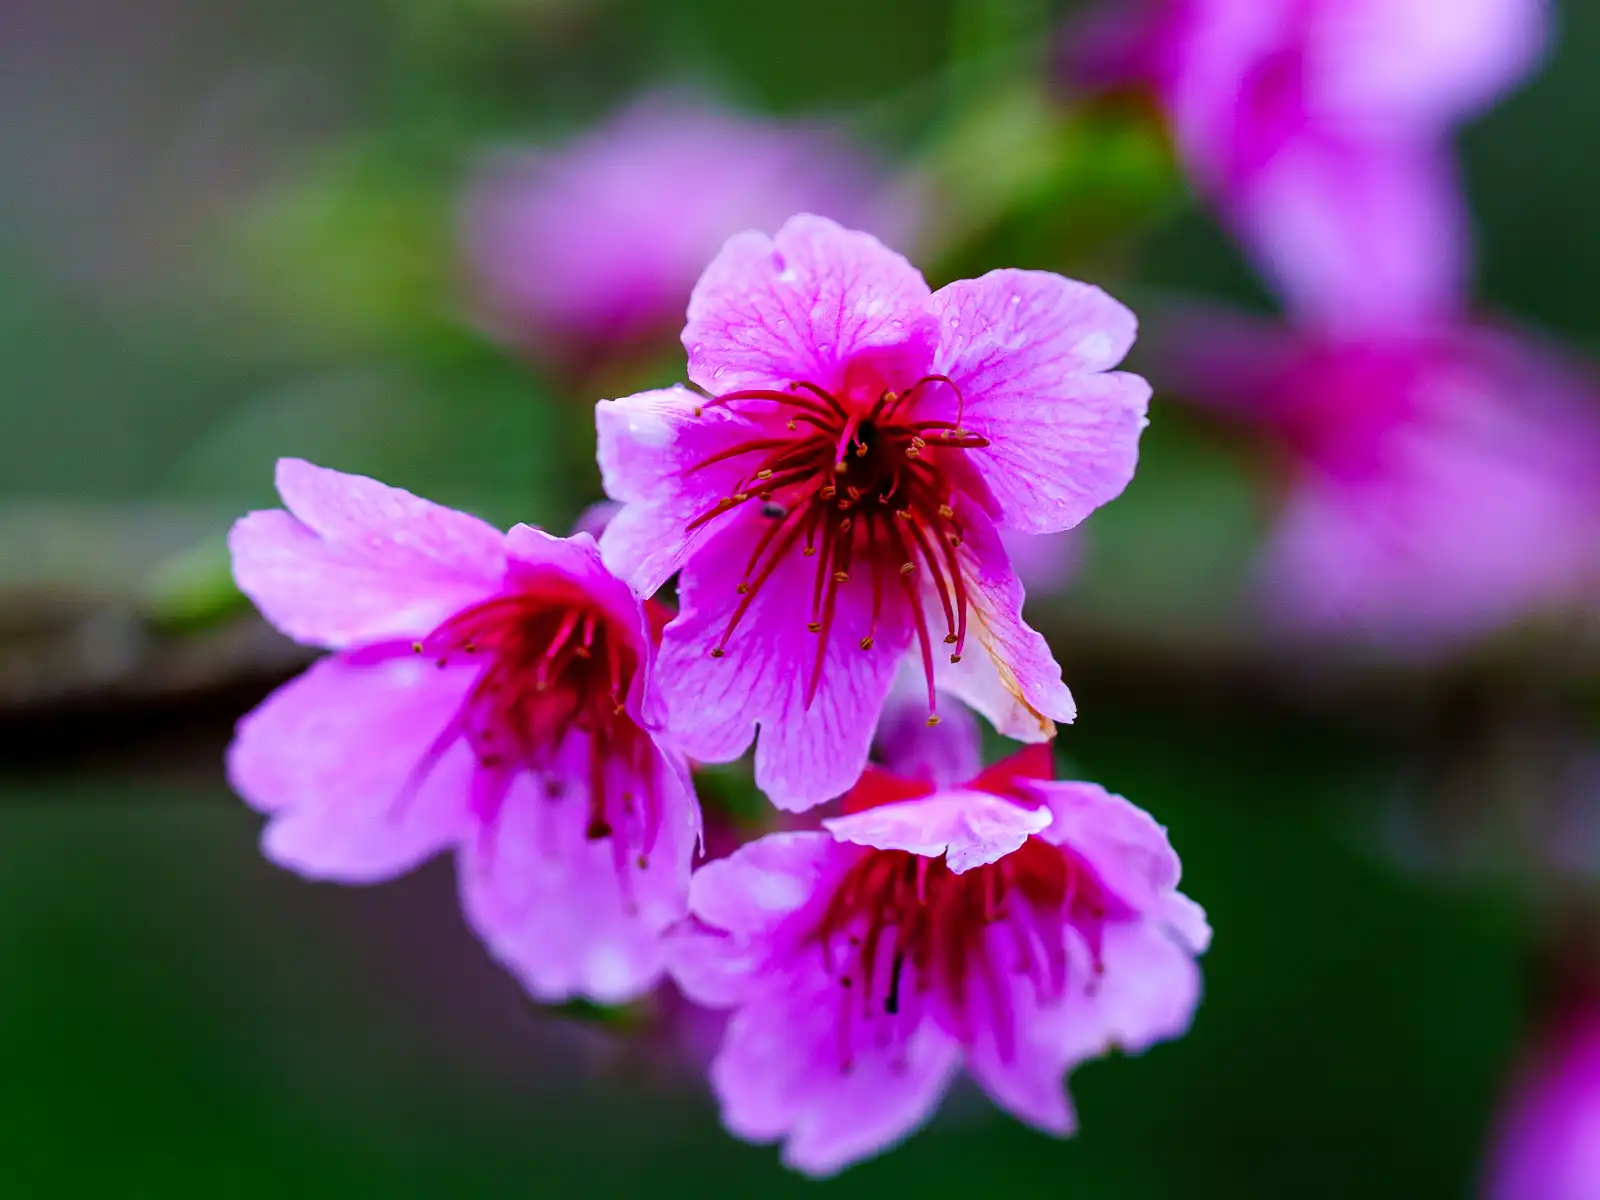 A close-up shot of a red cherry blossom.